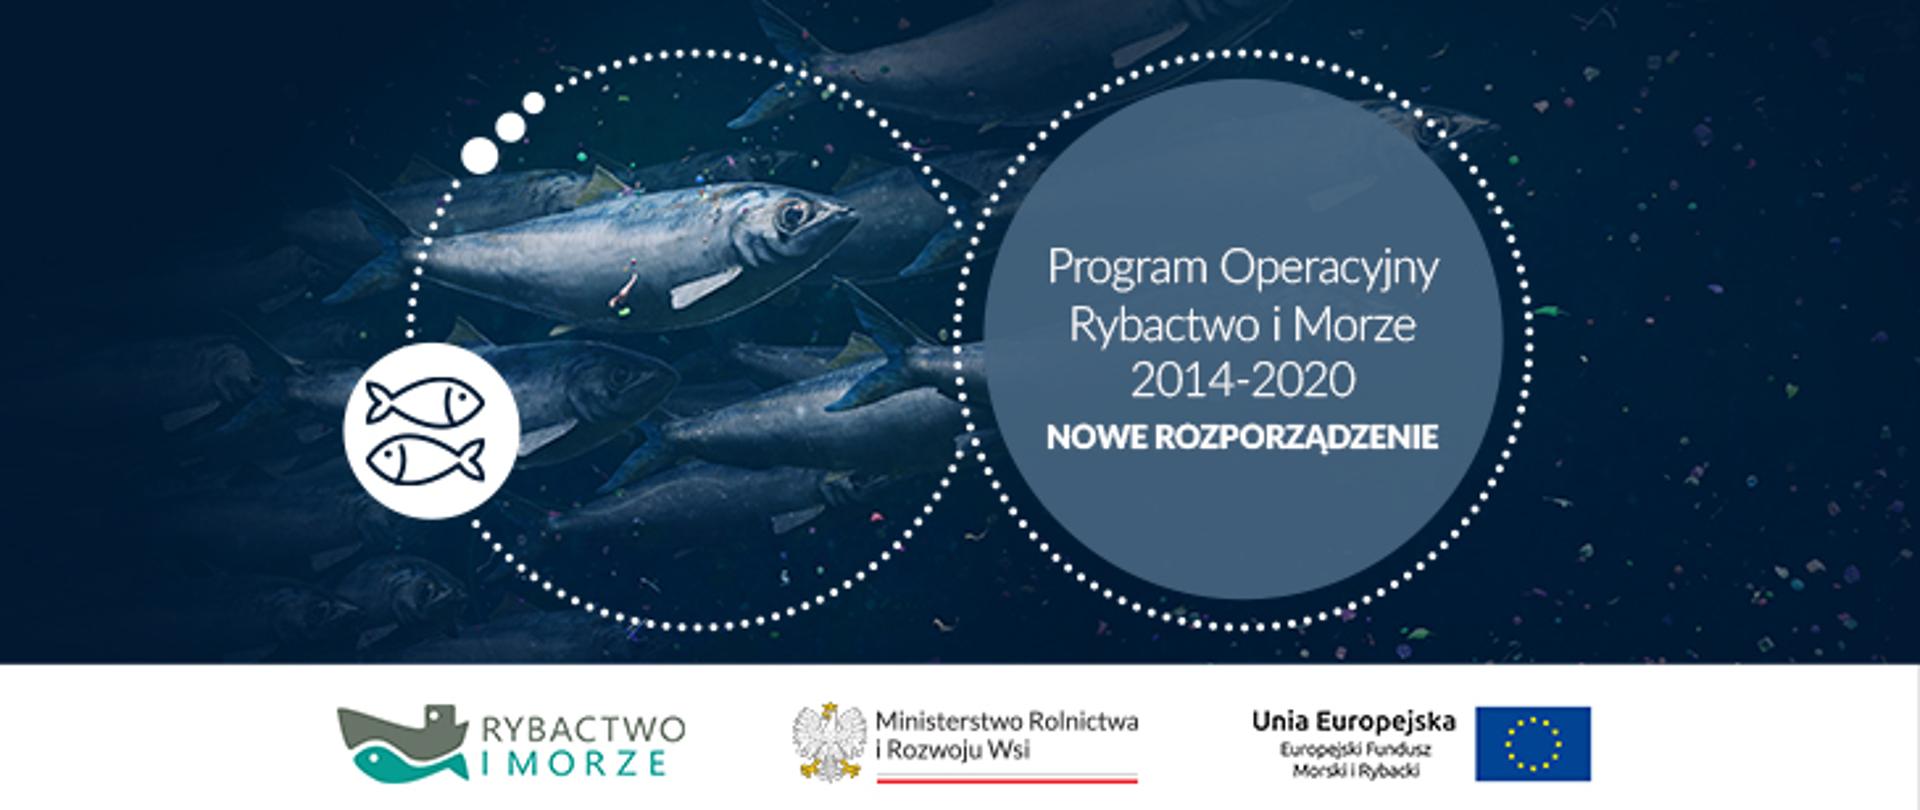 Program Operacyjny Rybactwo i Morze 2014-2020 – zmiany